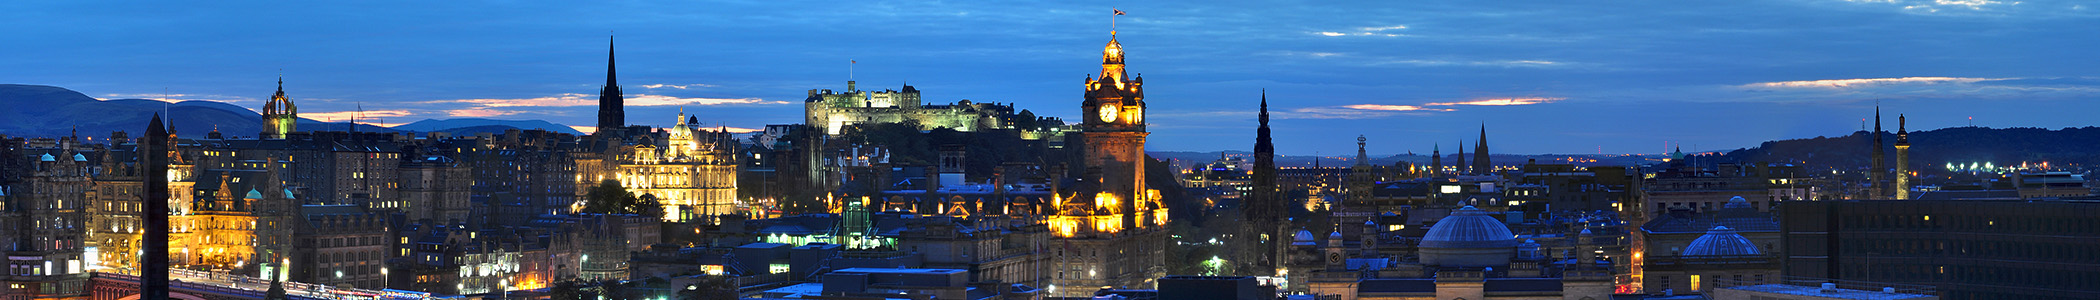 Banner: Edinburgh panorama at night